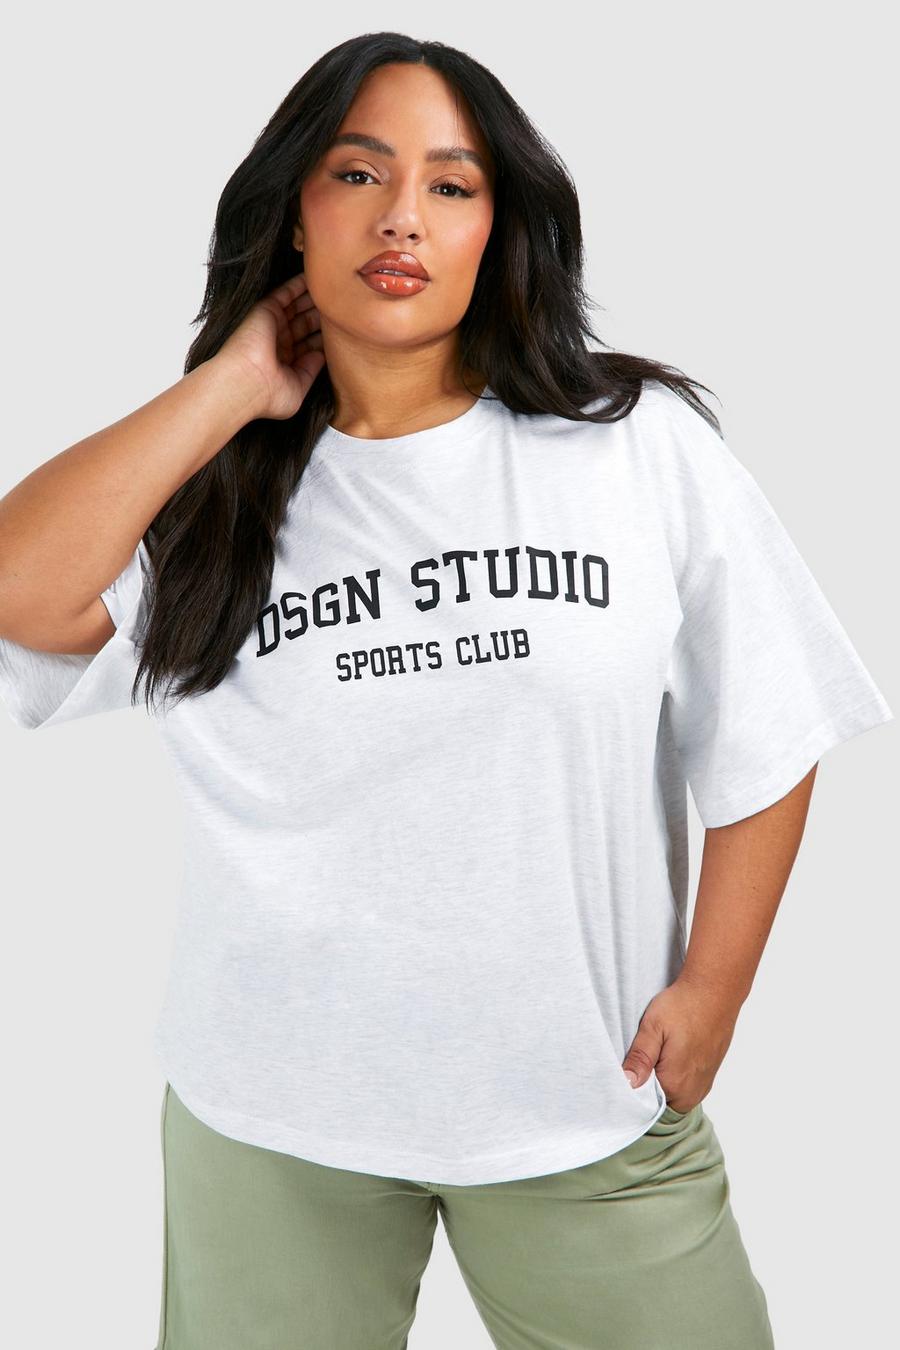 Camiseta Plus oversize con estampado Dsgn Studio Sports Club, Ash grey